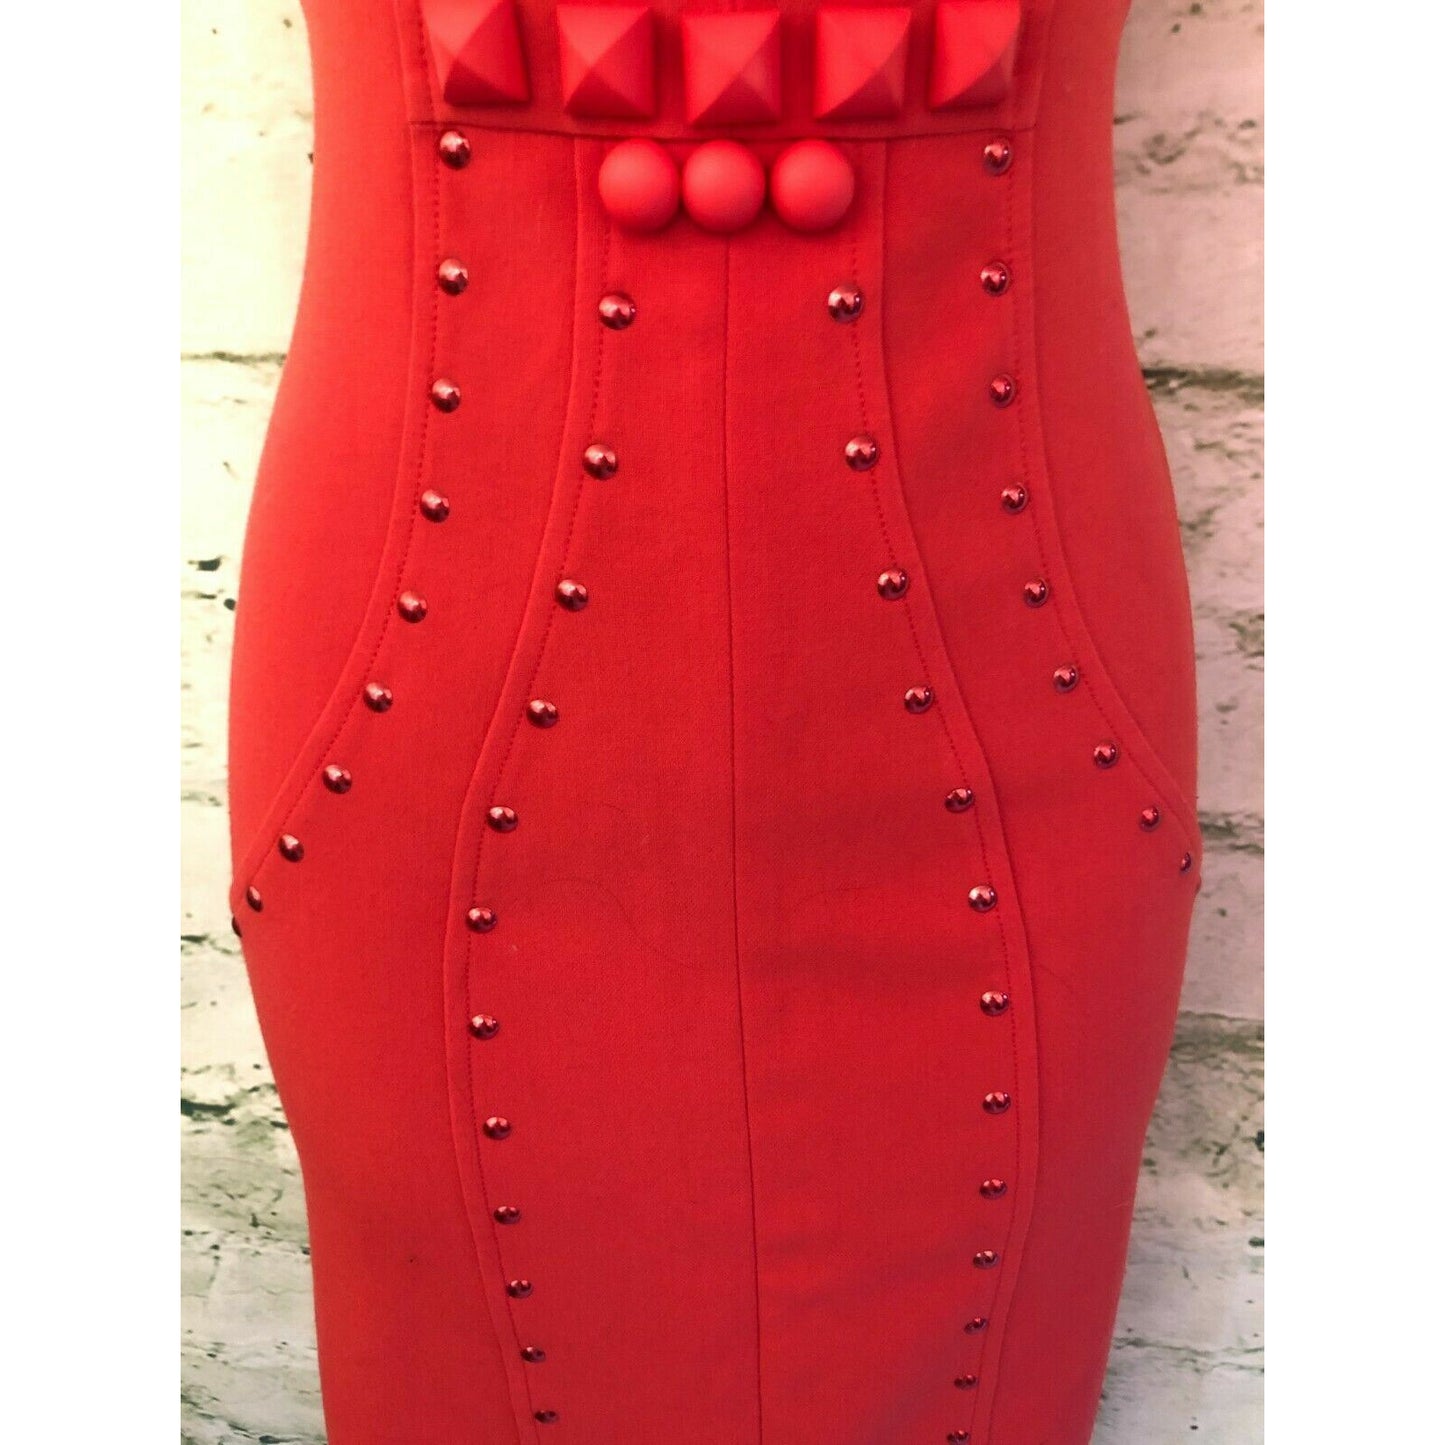 Tenax Red Studded Bodycon Sleeveless Dress UK 8 US 4 EU 36 IT 40 RRP £230.00 Timeless Fashions